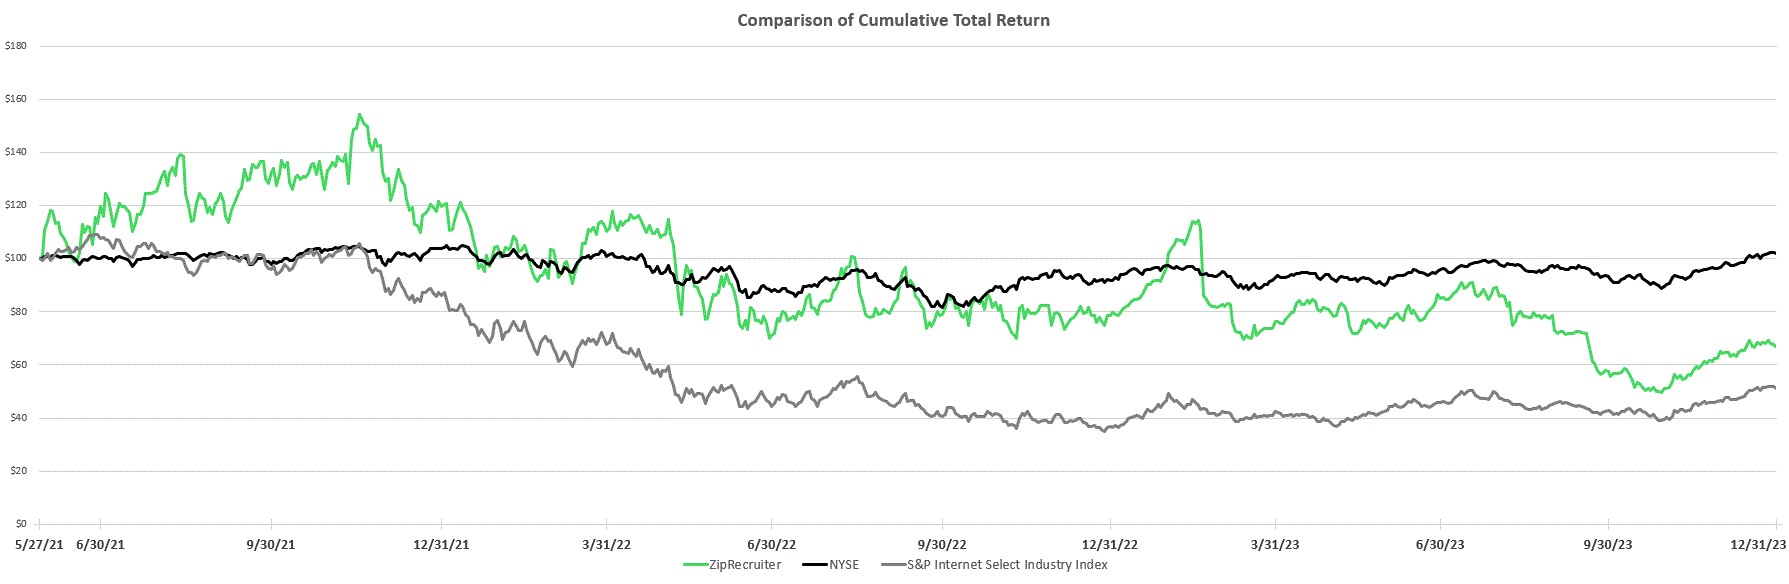 Cumulative Total Return FY 2023.jpg